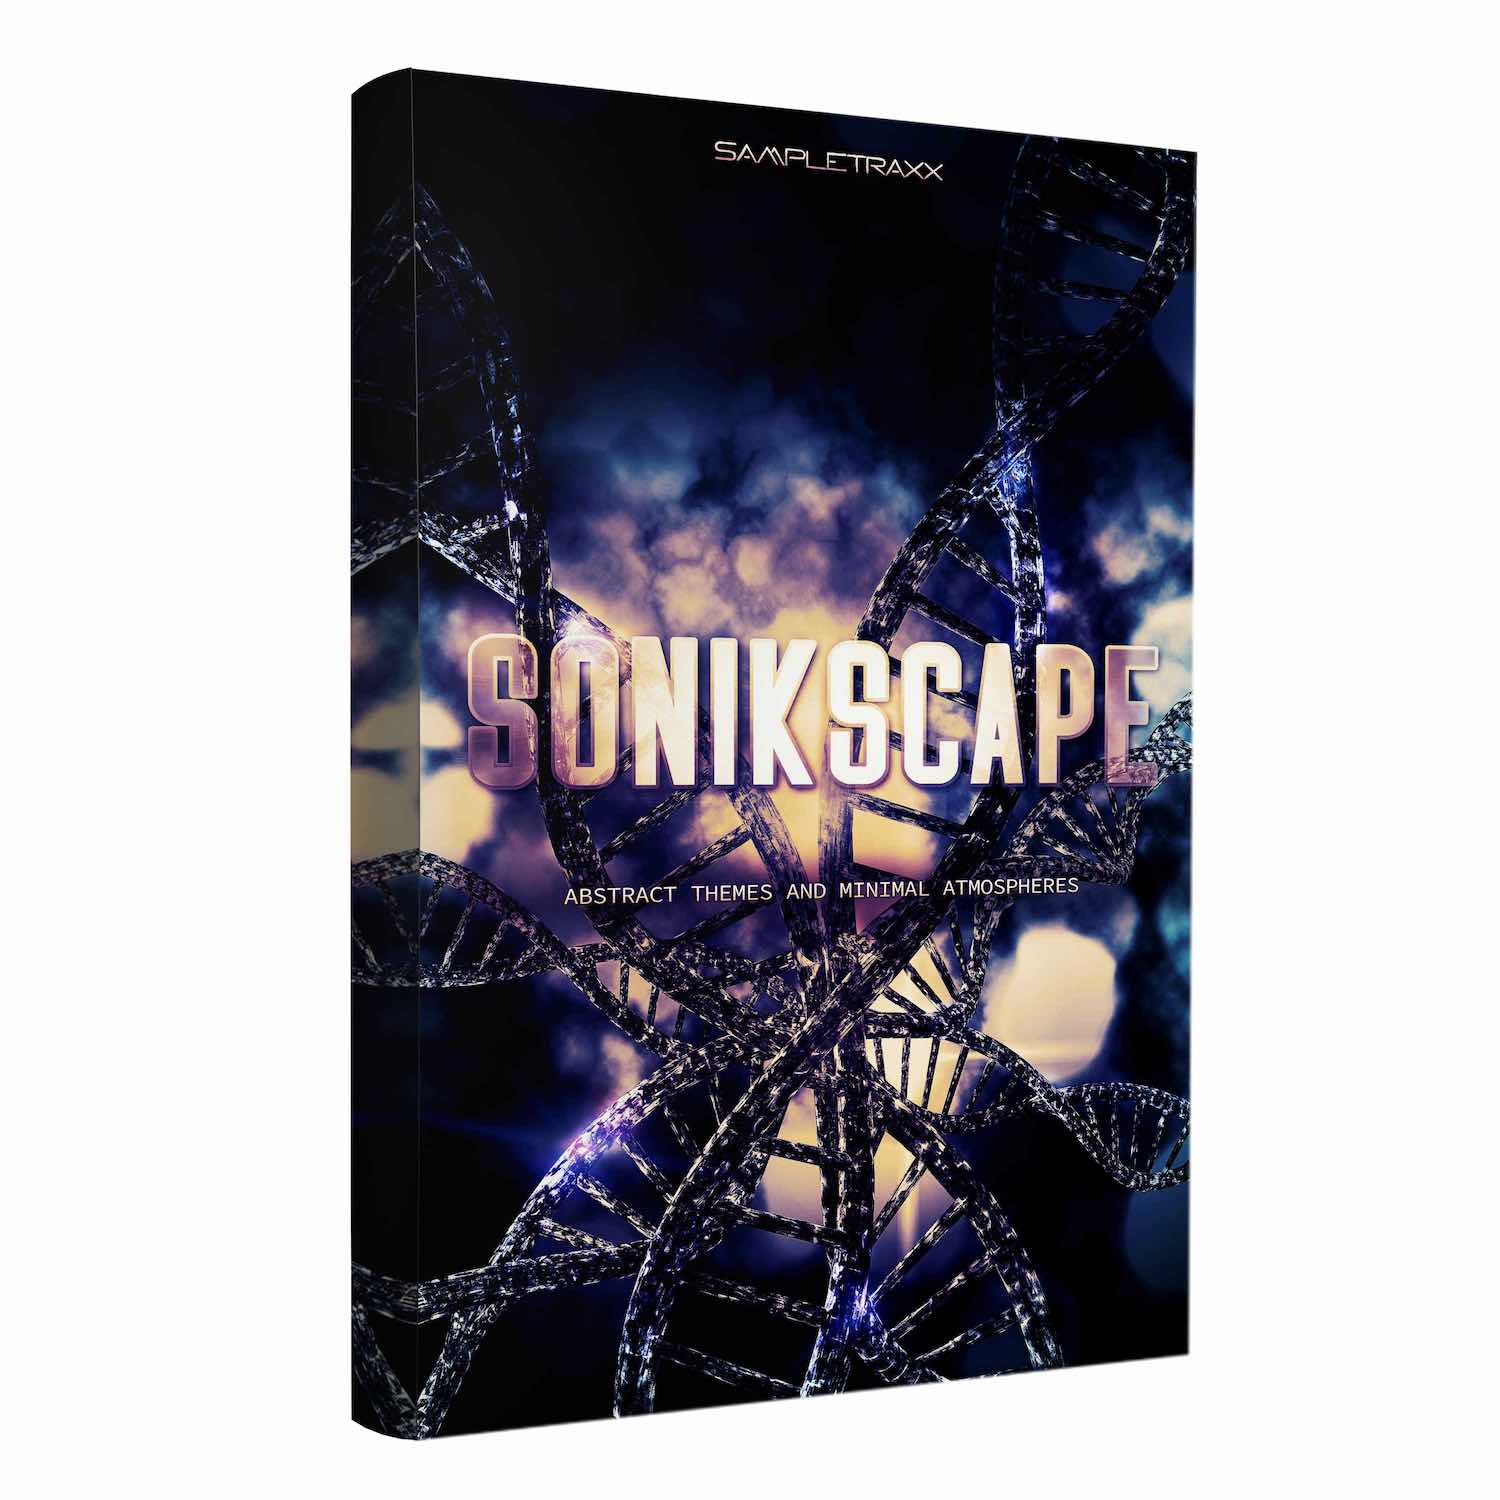 “Sonikscape” Dark Cinematic Atmospheres by SampleTraxx Released